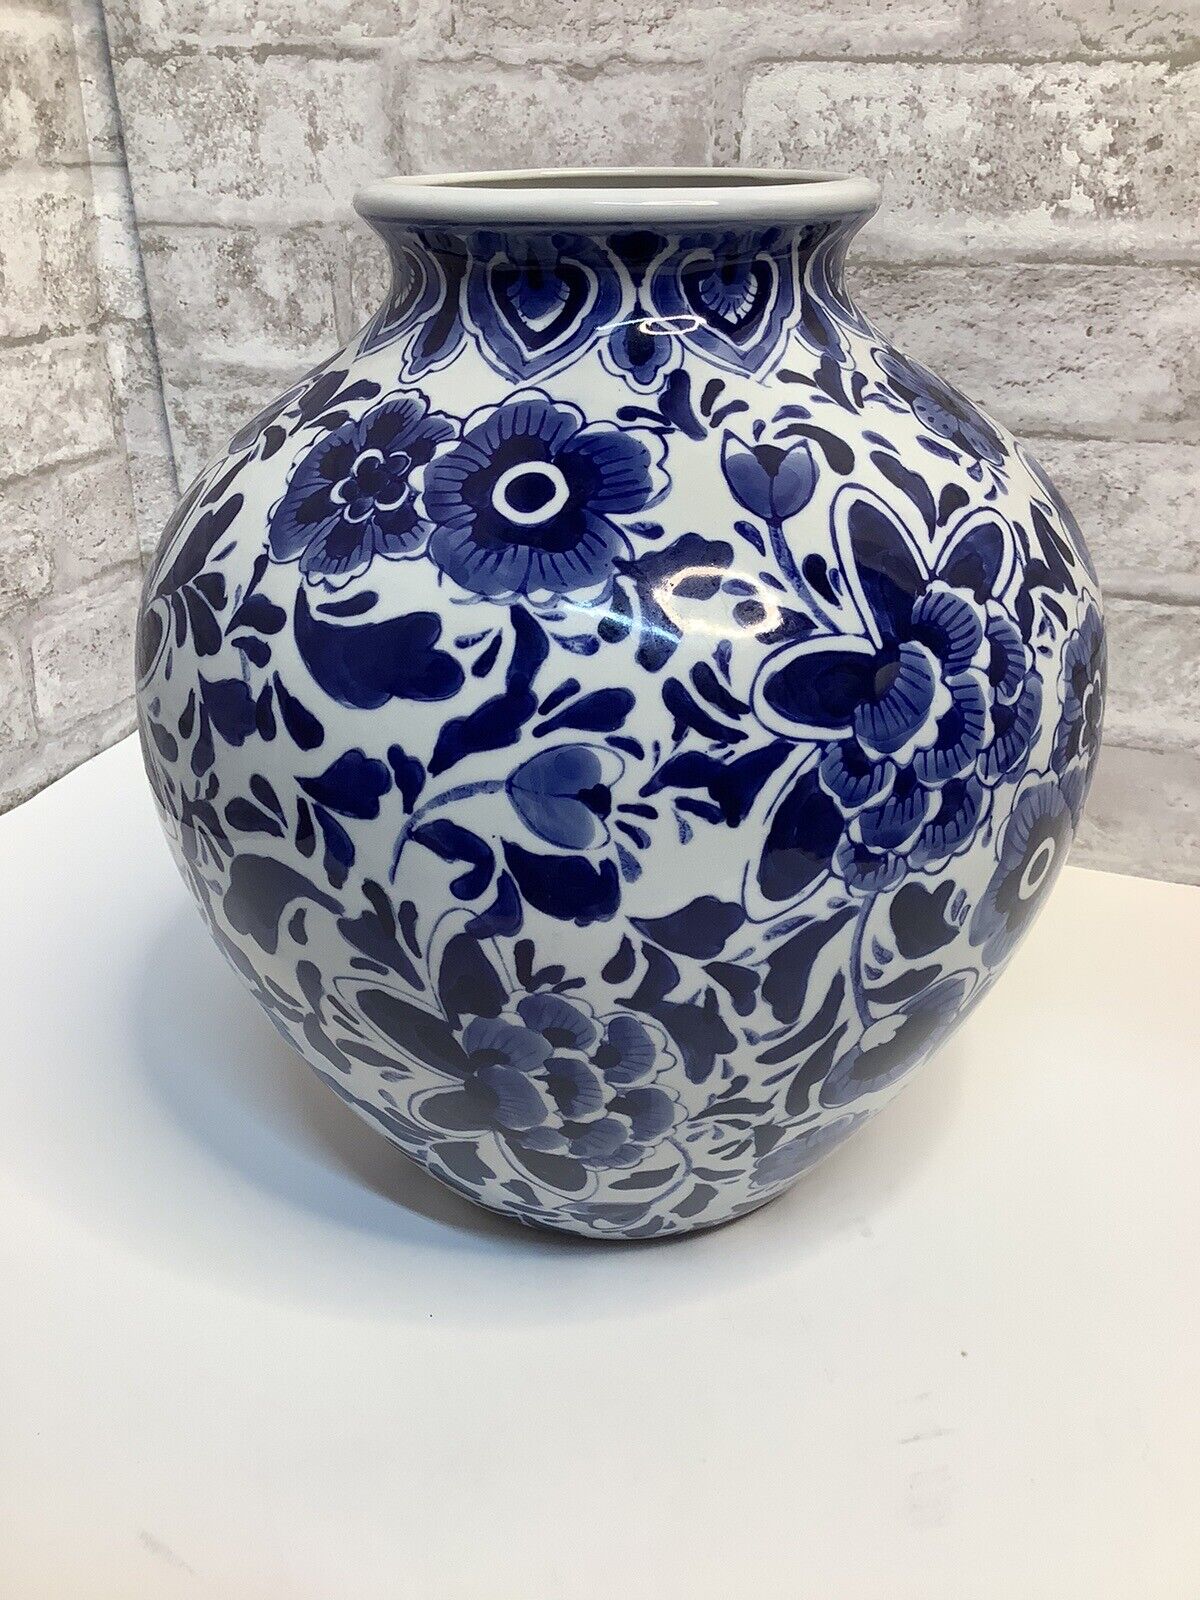 Vintage Blue & White Vase Ceramic Floral Rare Asian Chinese Large 10.5” x 9”